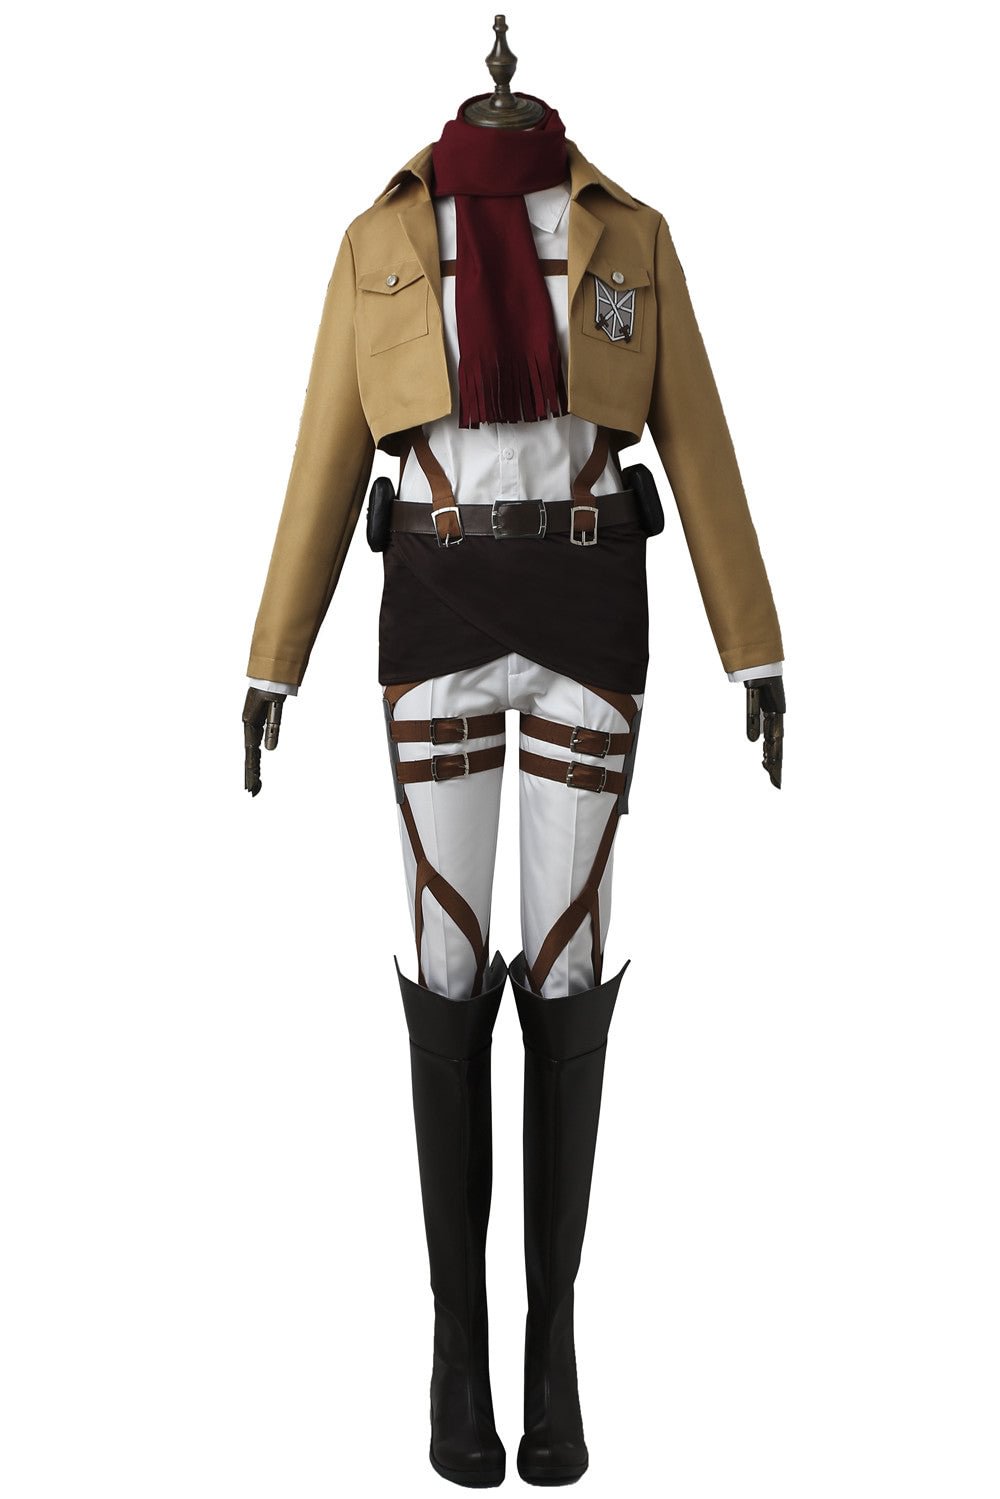 Attack on Titan Shingeki no Kyojin Mikasa Akkaman 104th Cadet Corps Cosplay Costume